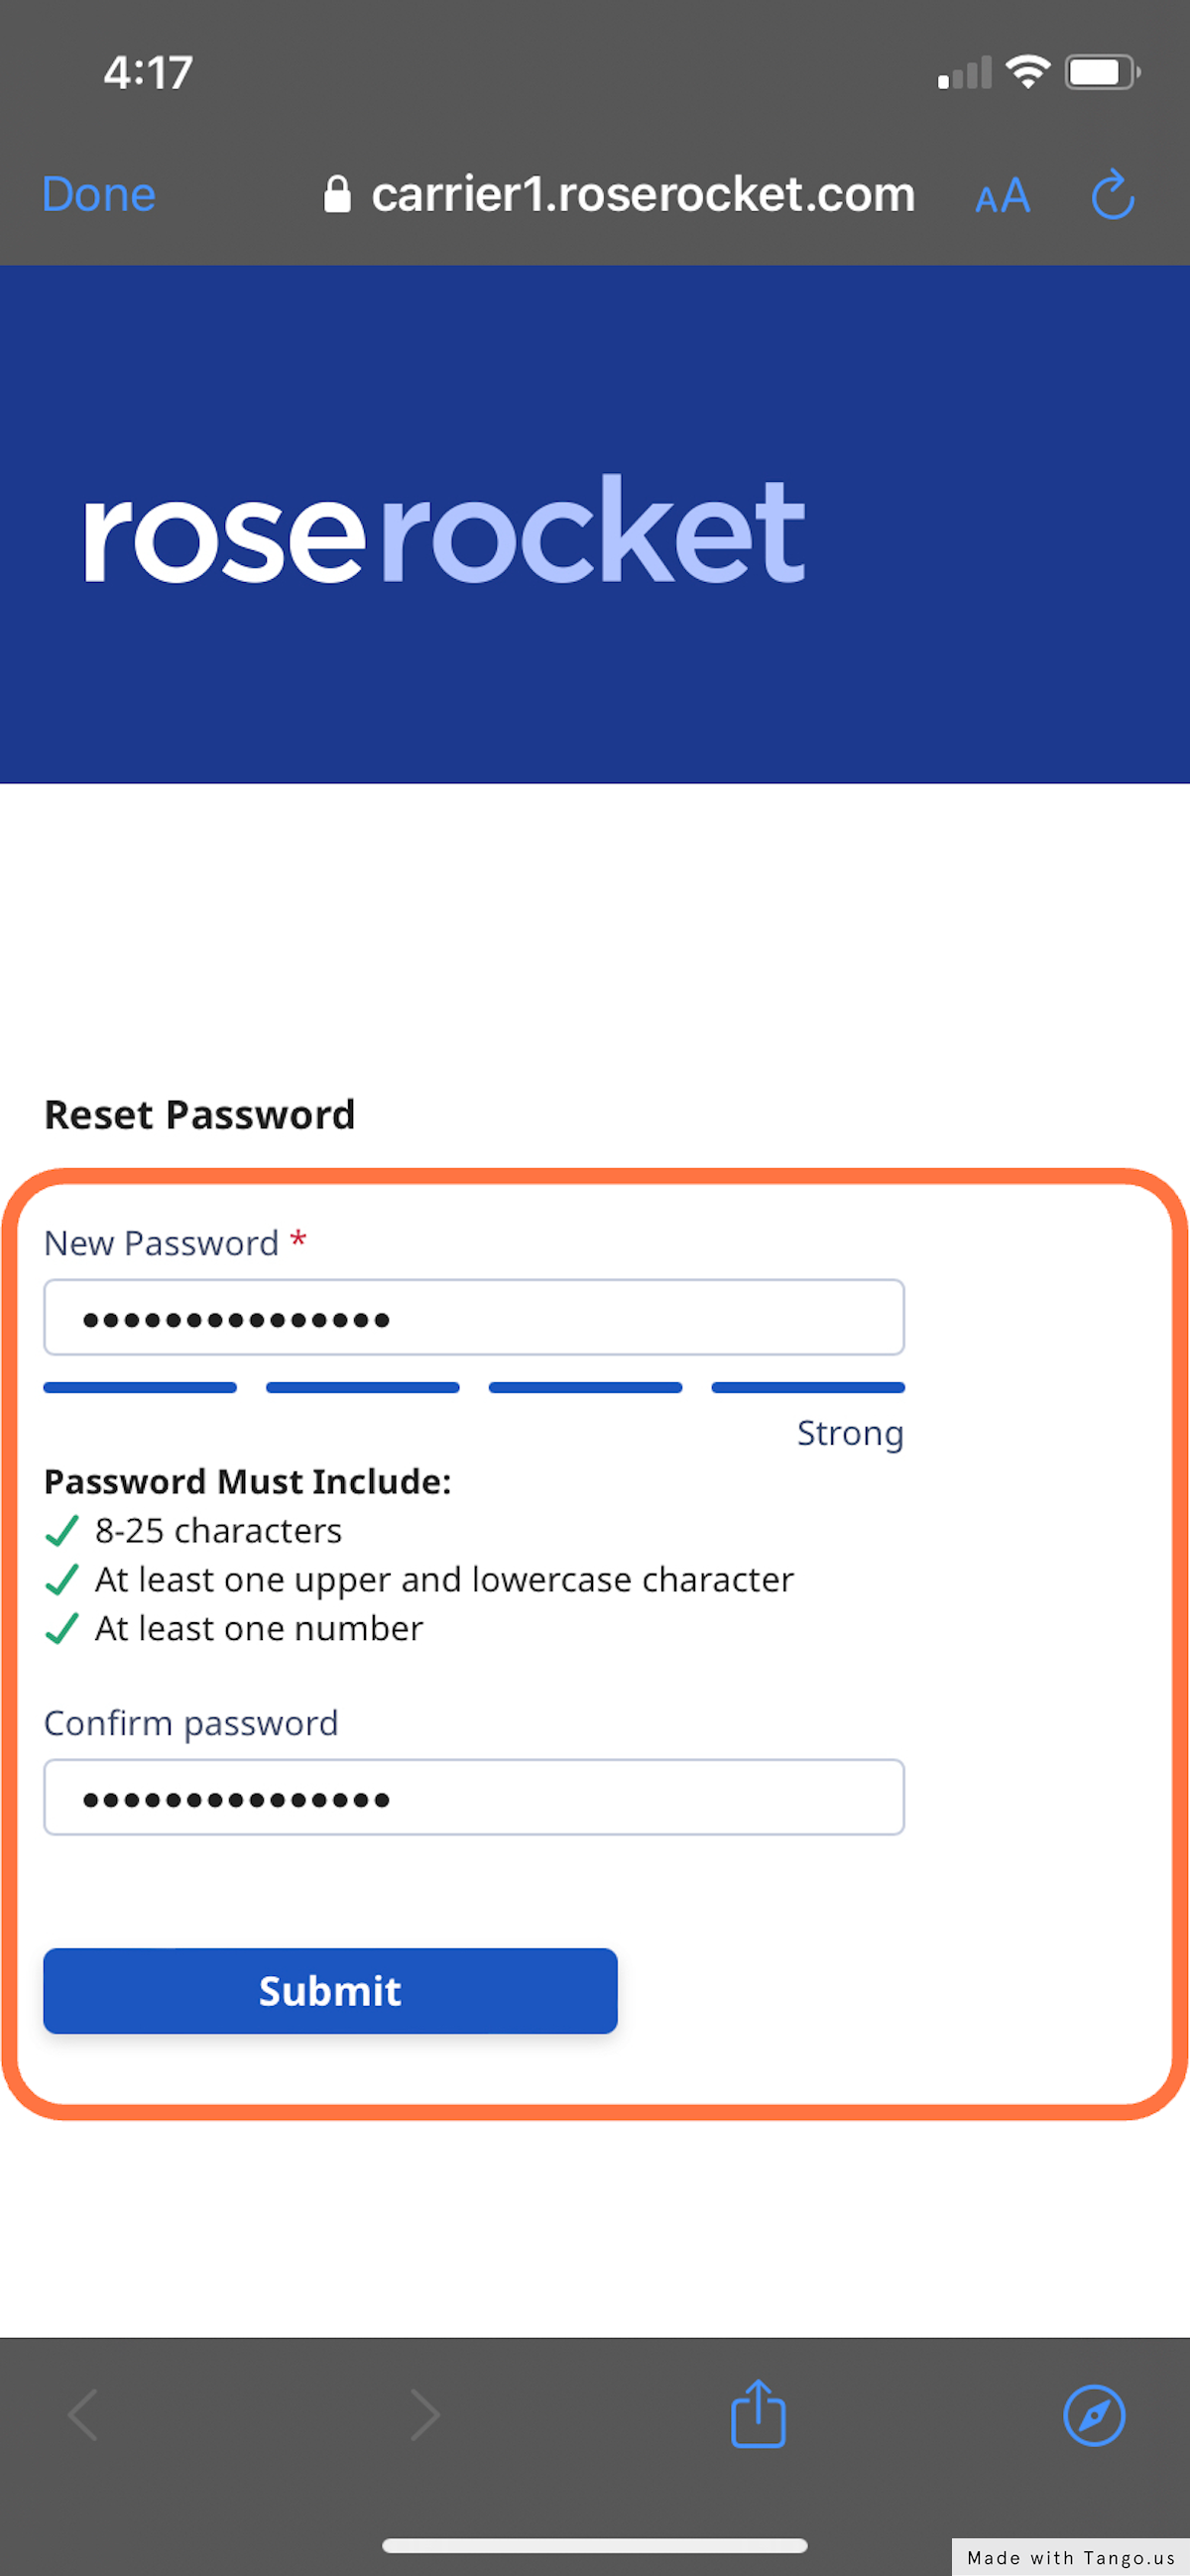 Create a new password.